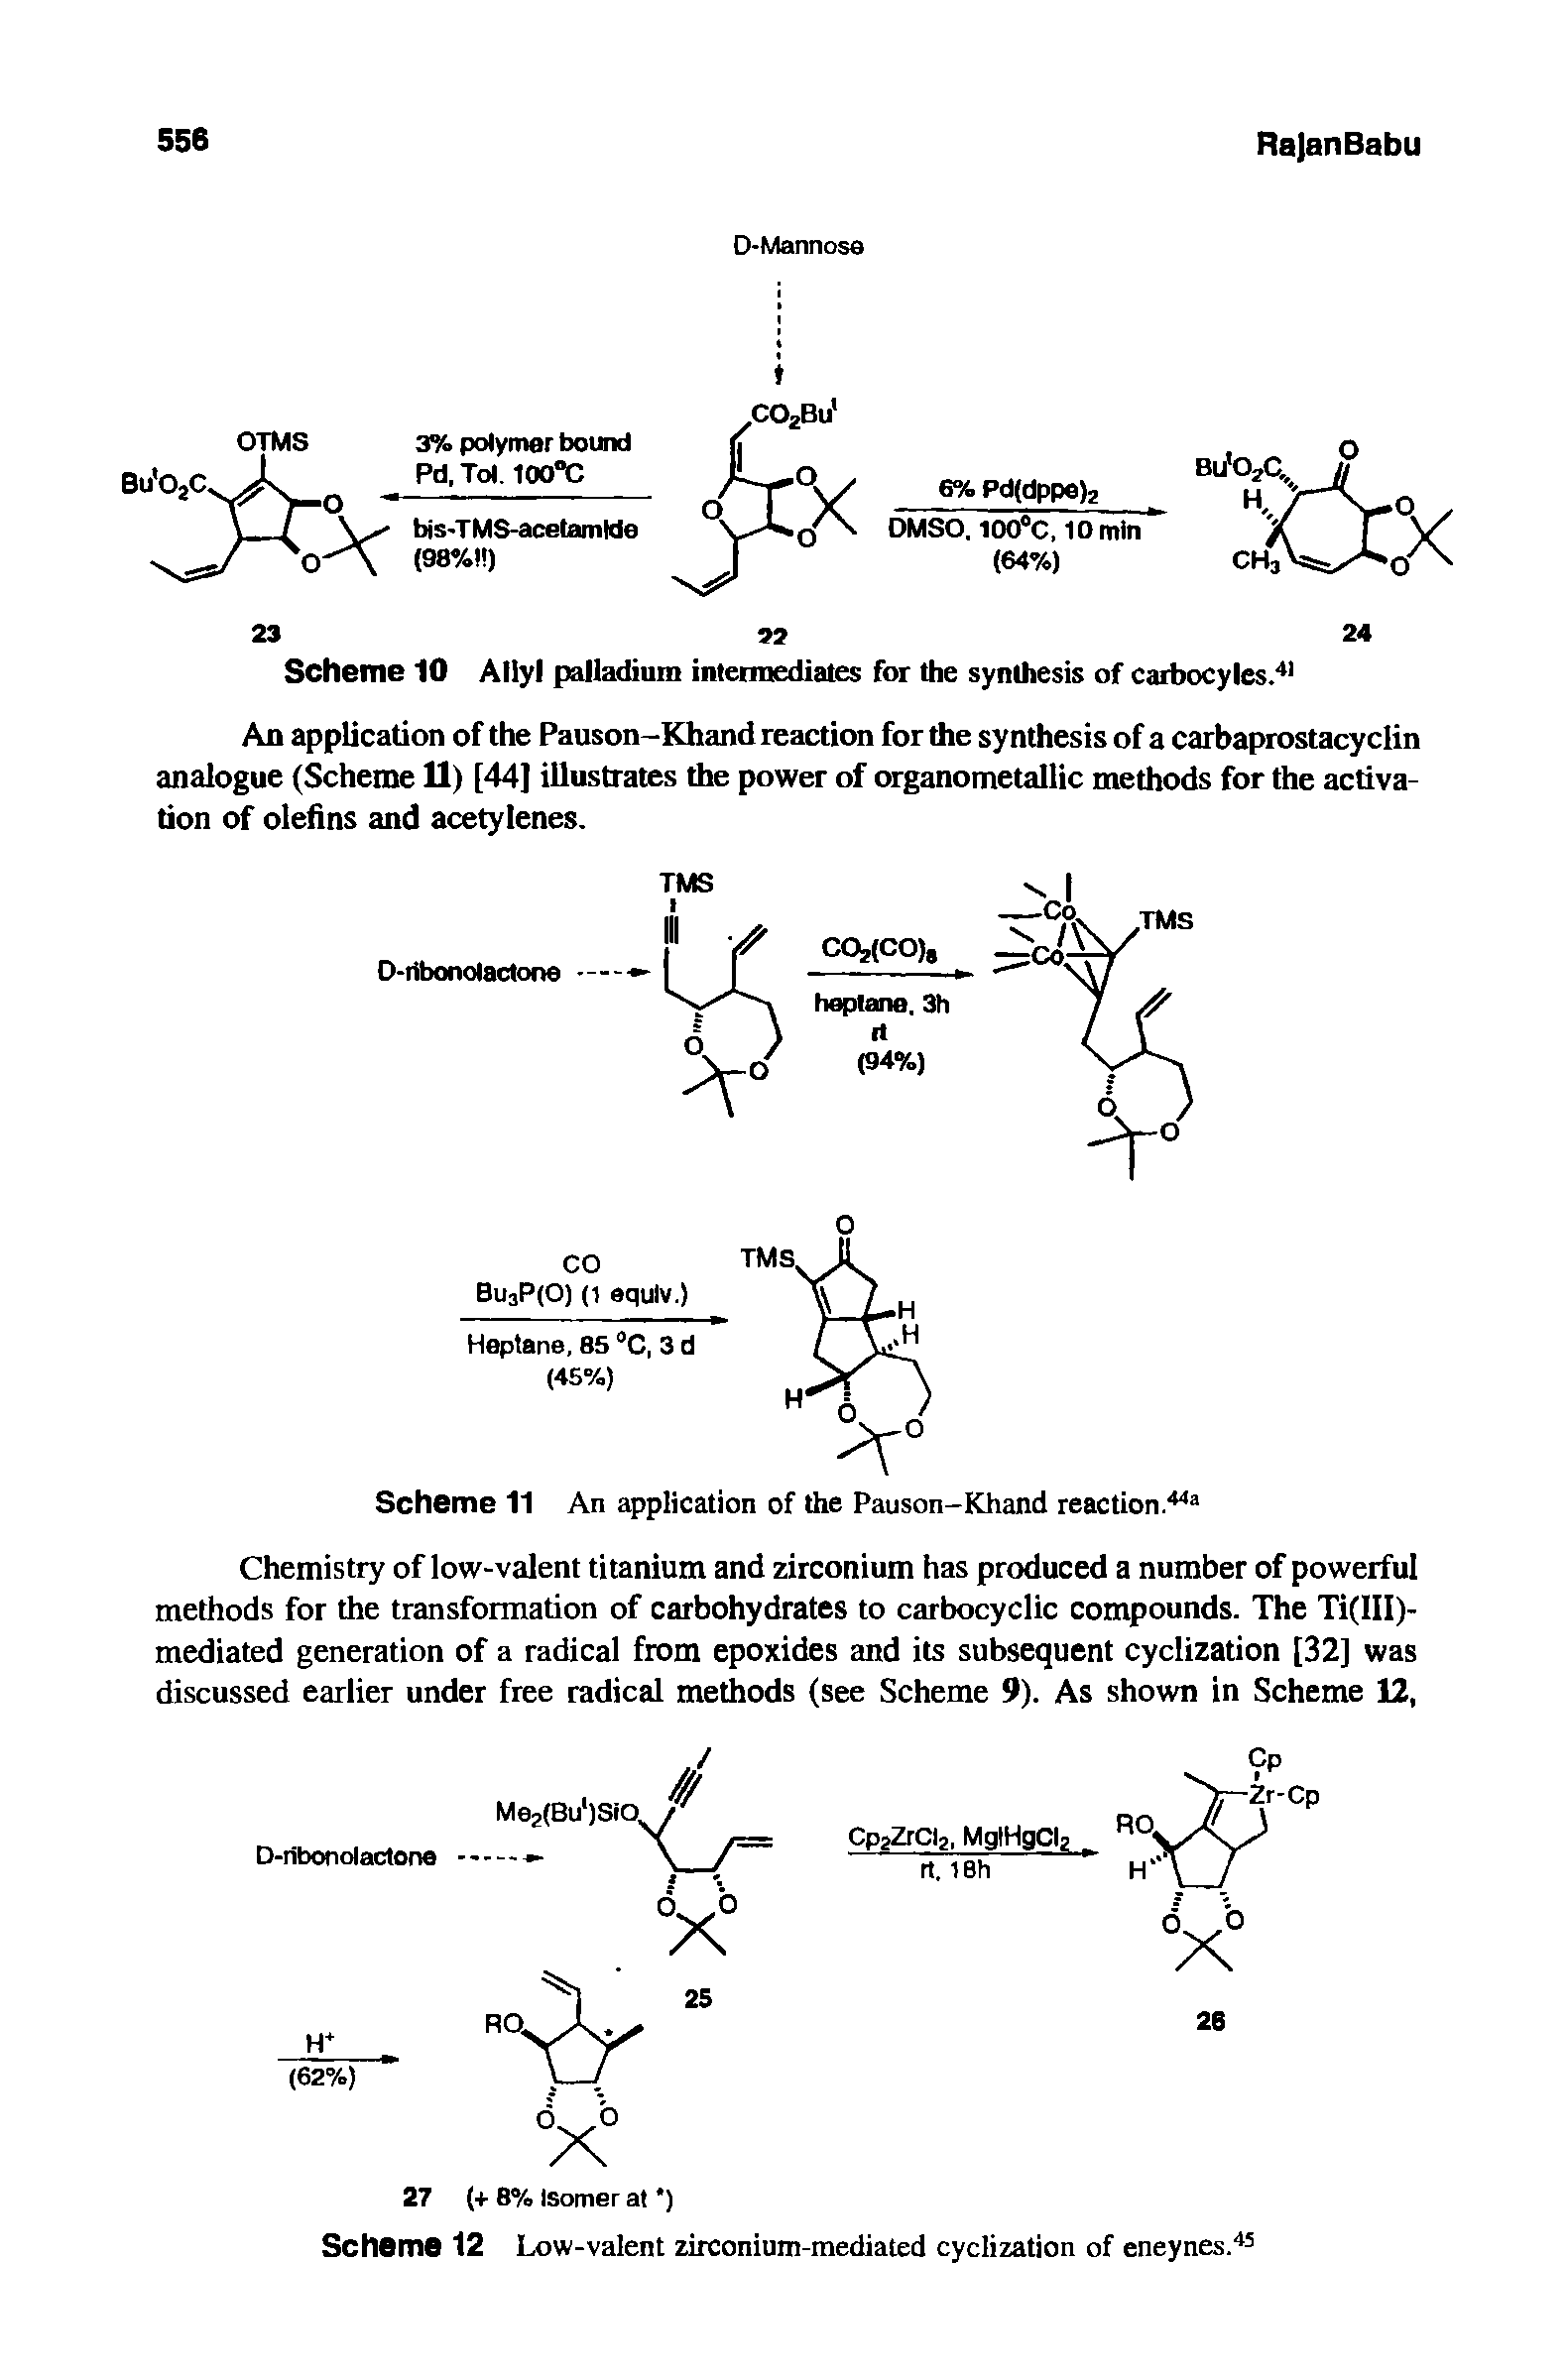 Scheme 12 Low-valent zirconium-mediated cyclization of eneynes.45...